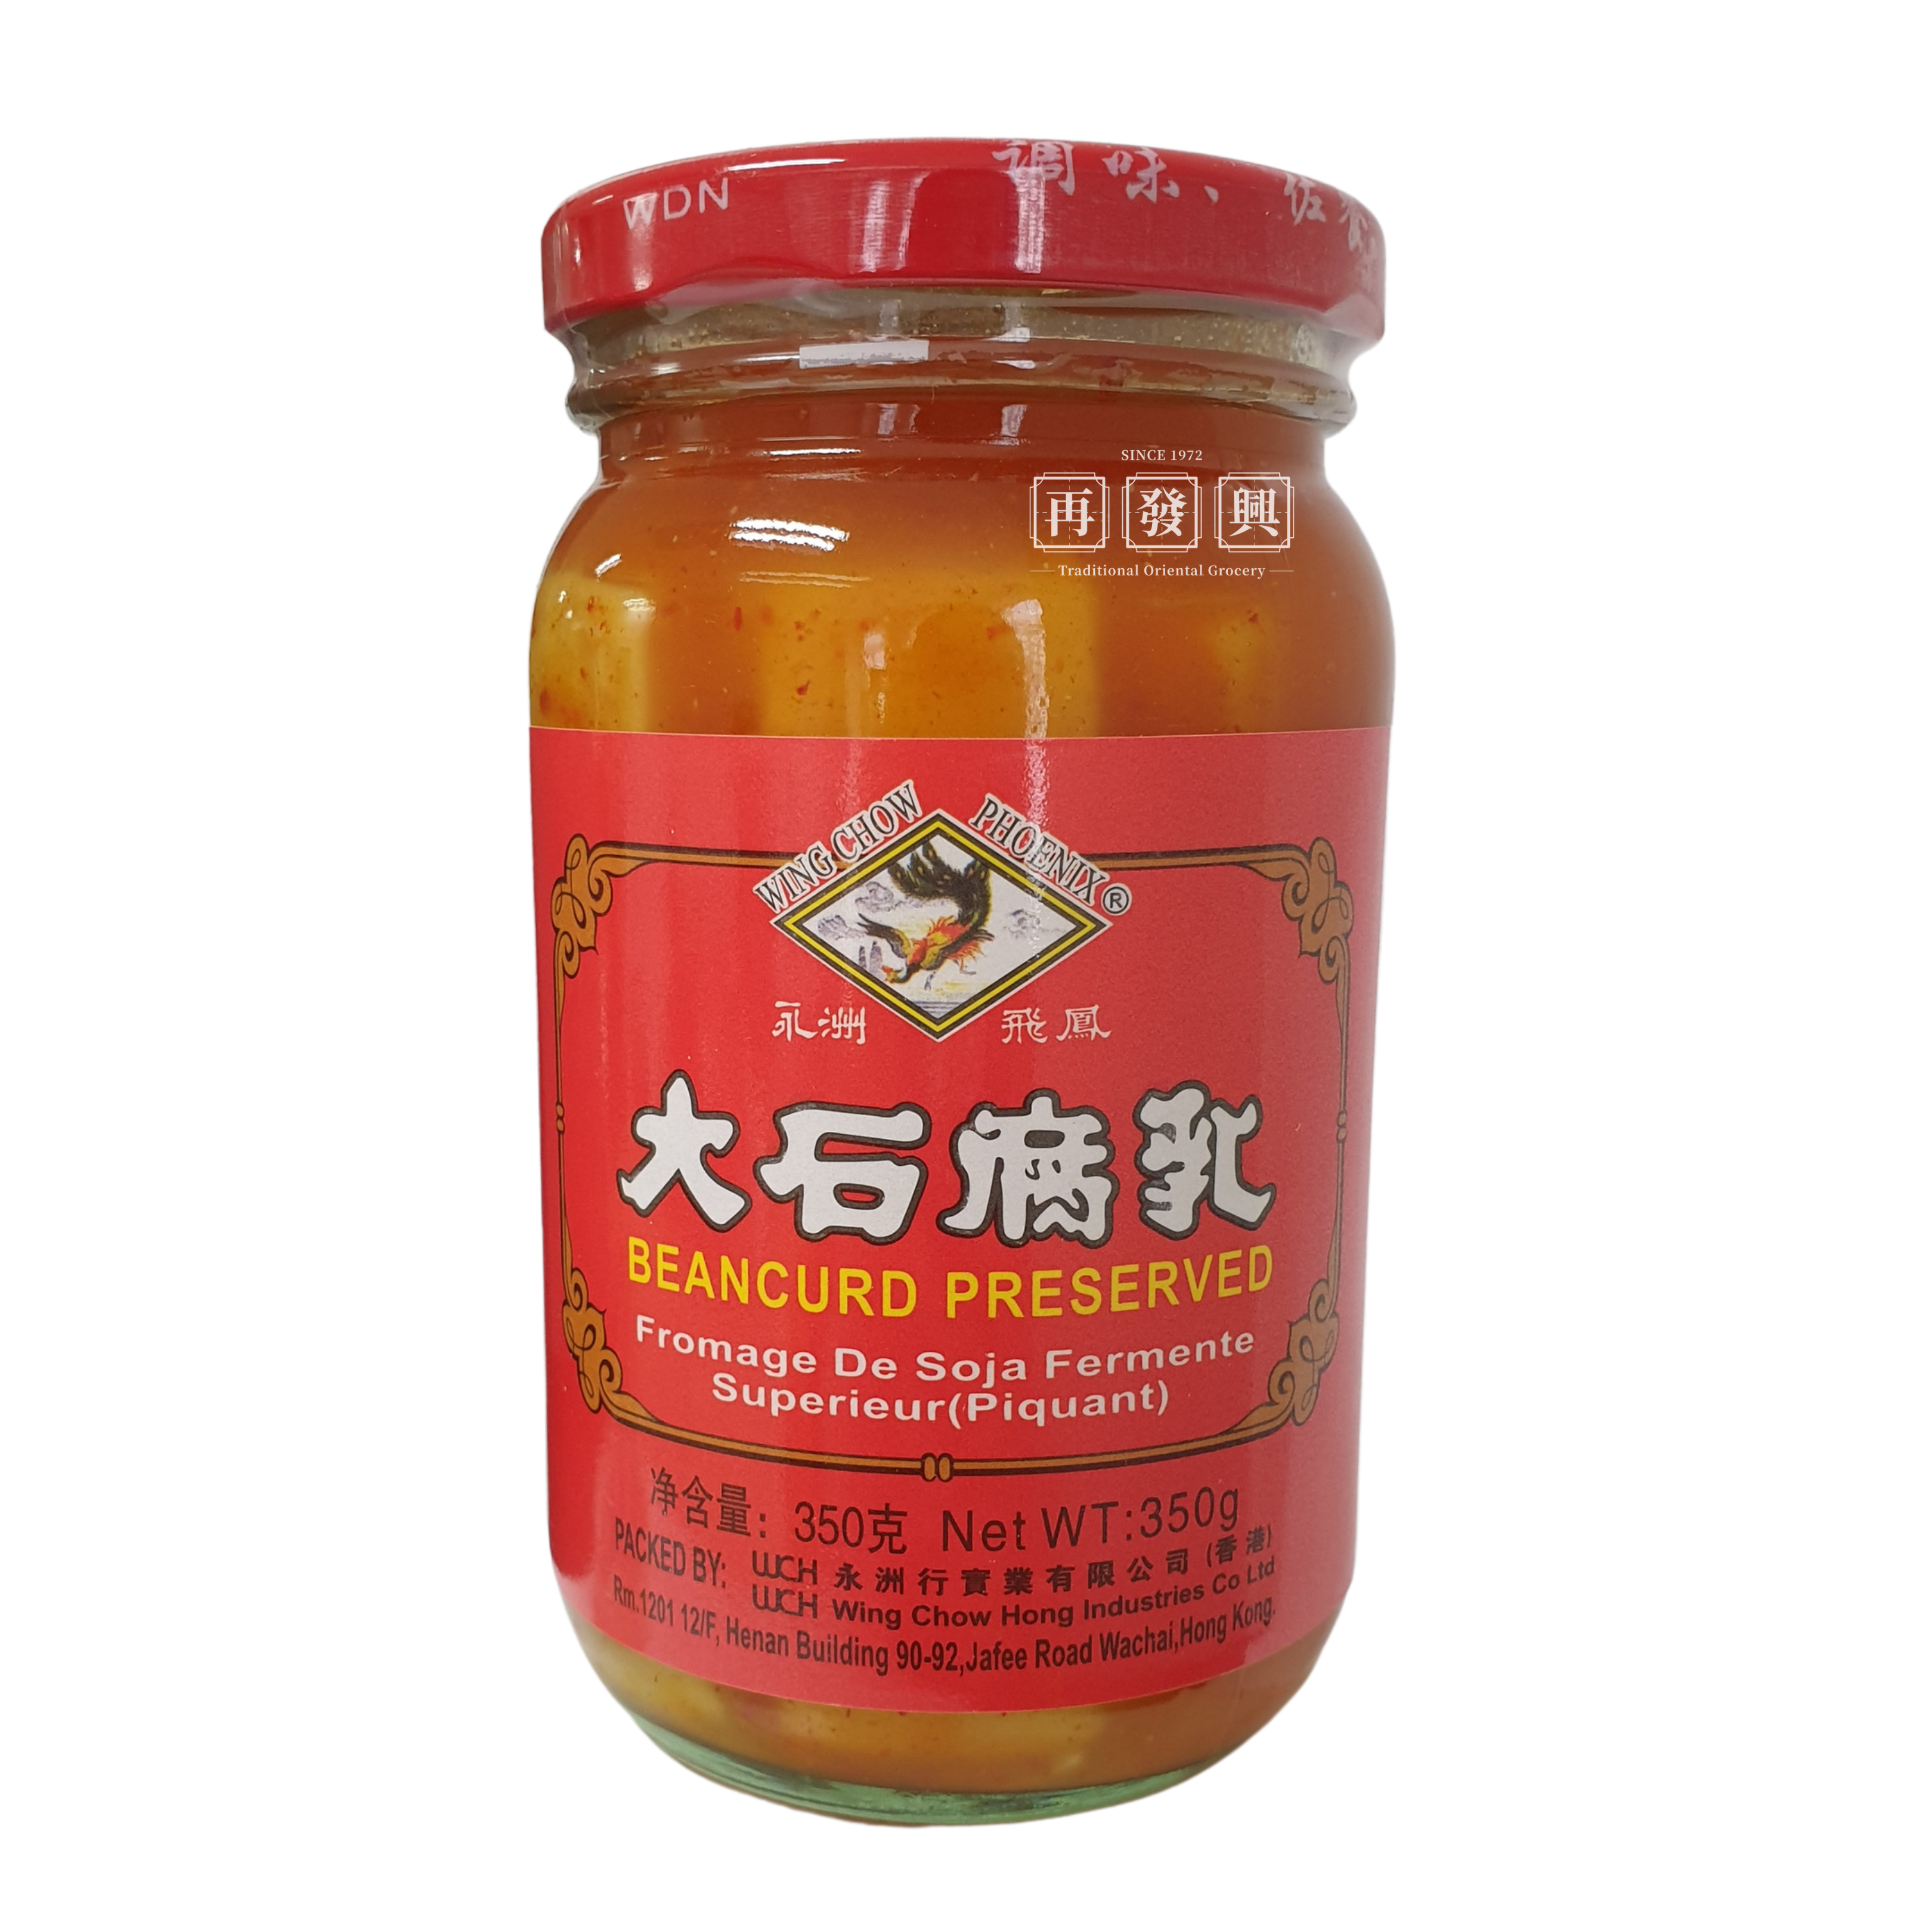 Wing Chow HK Bean Curd Preserved 永州飞凤大石腐乳 350g